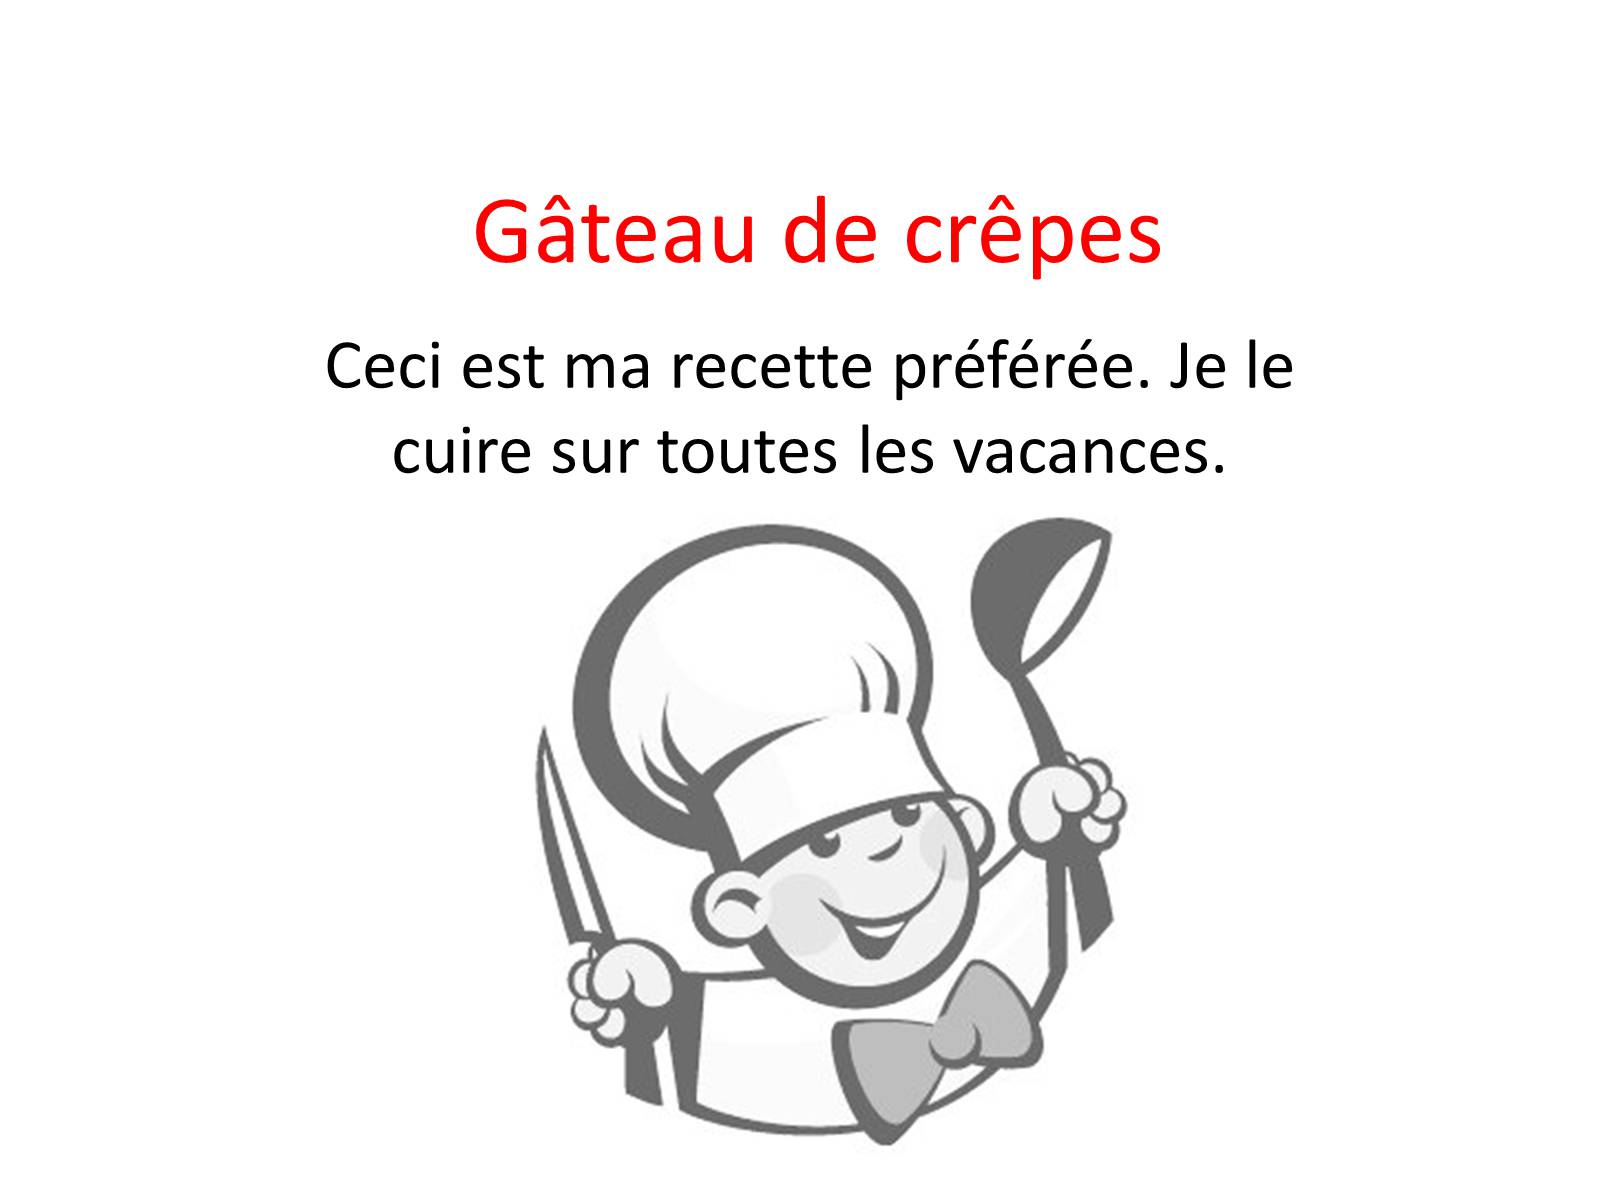 Презентація на тему «Gateau de crepes» - Слайд #1